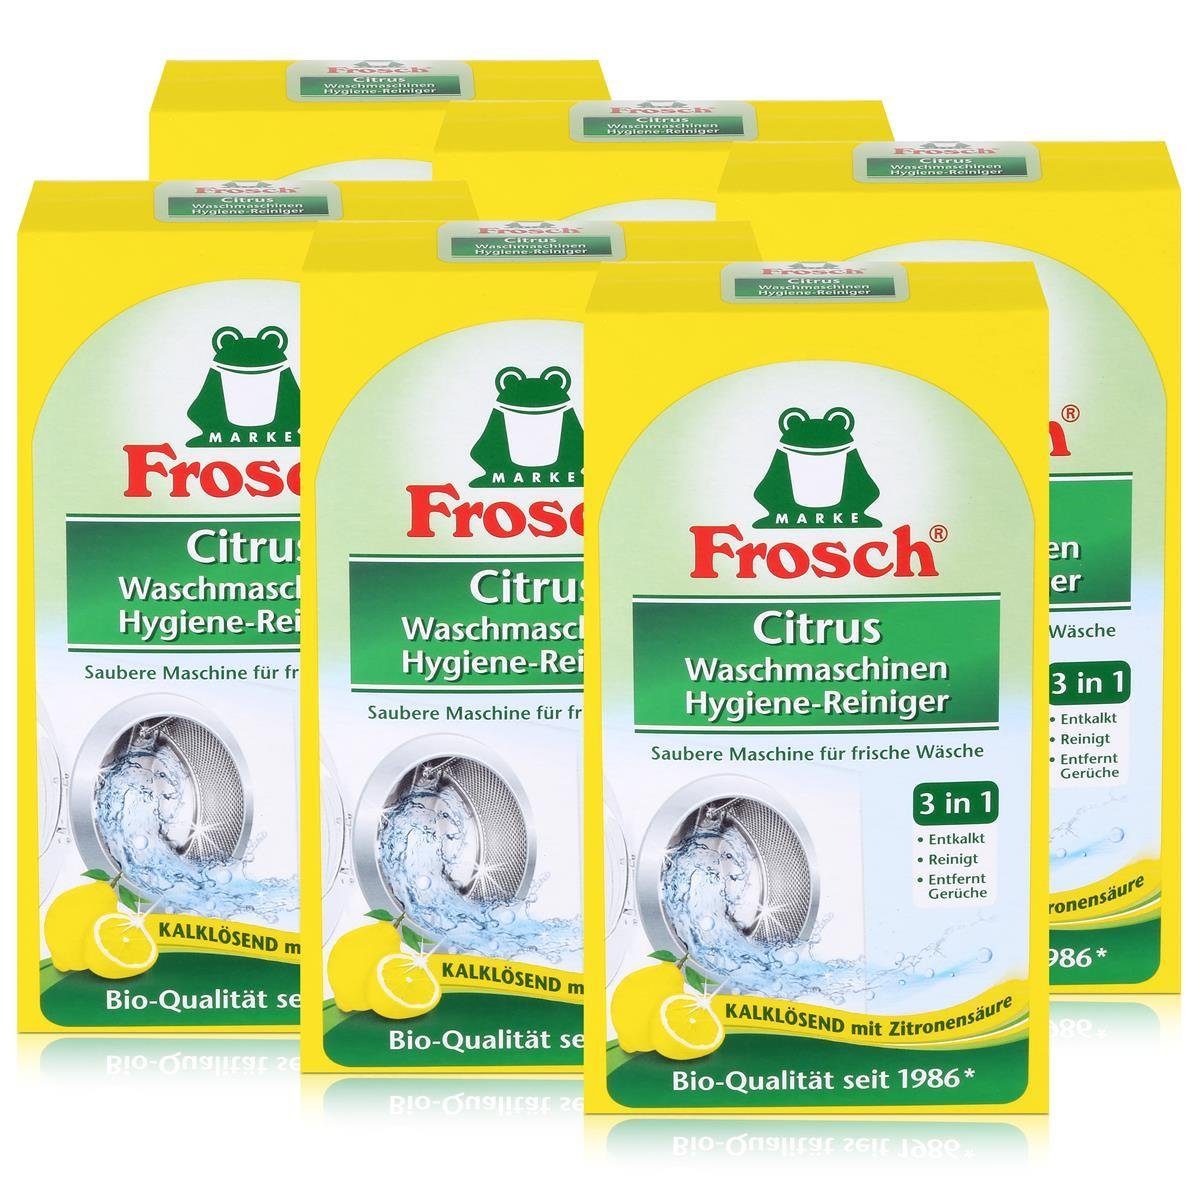 FROSCH Frosch Citrus Waschmaschinen Hygiene-Reiniger 250g - Kalklösend (6er P Spezialwaschmittel